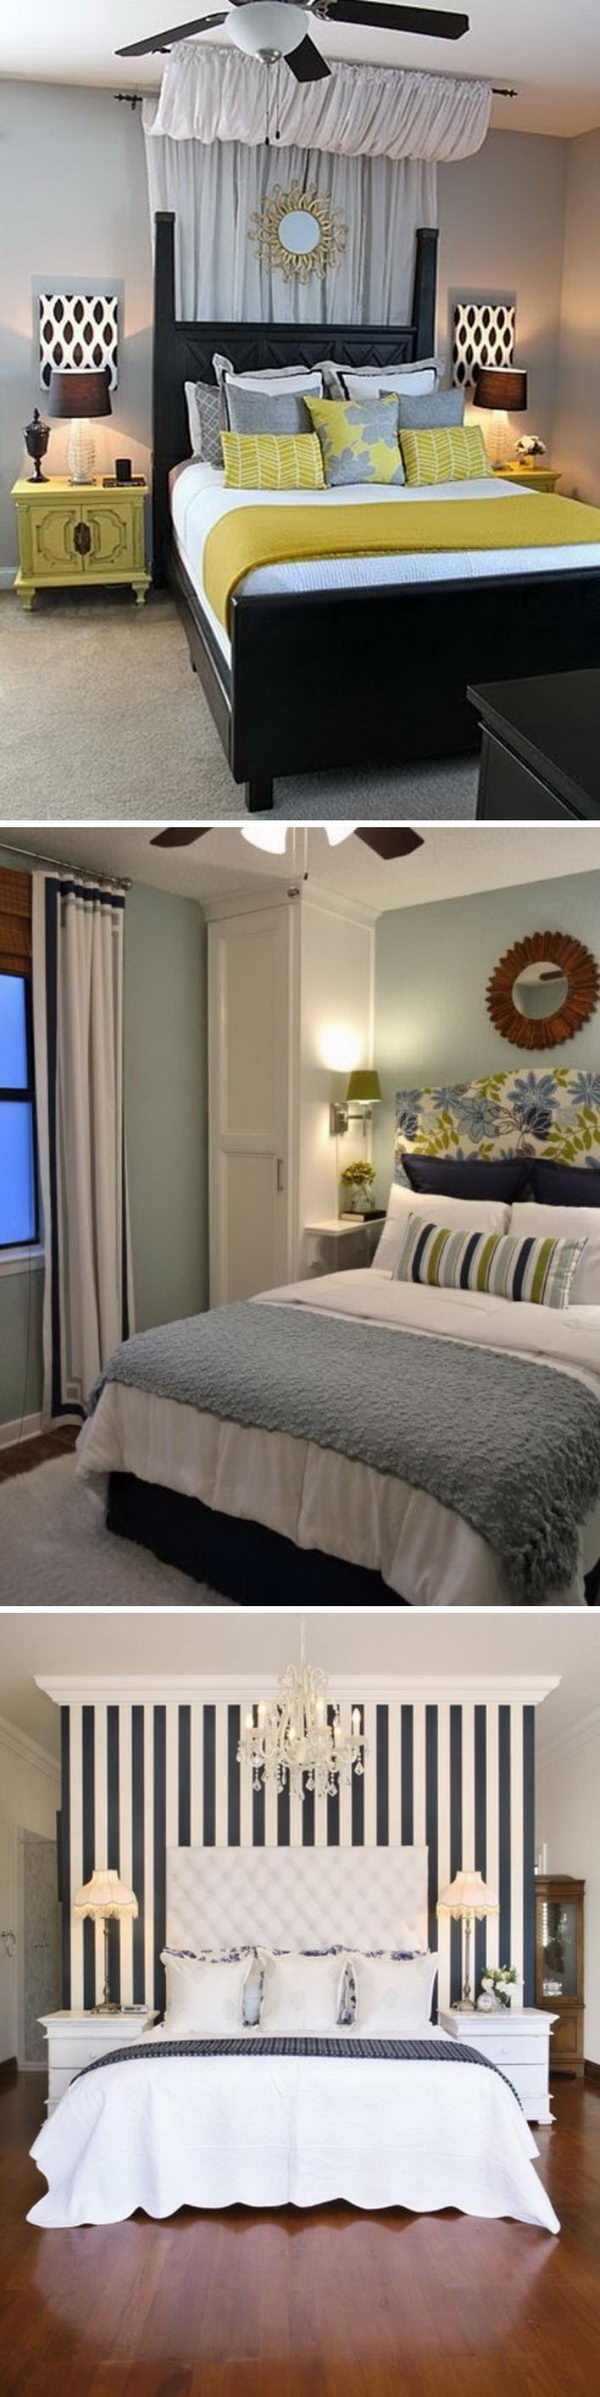 Creative Ways To Make Your Small Bedroom Look Bigger. 